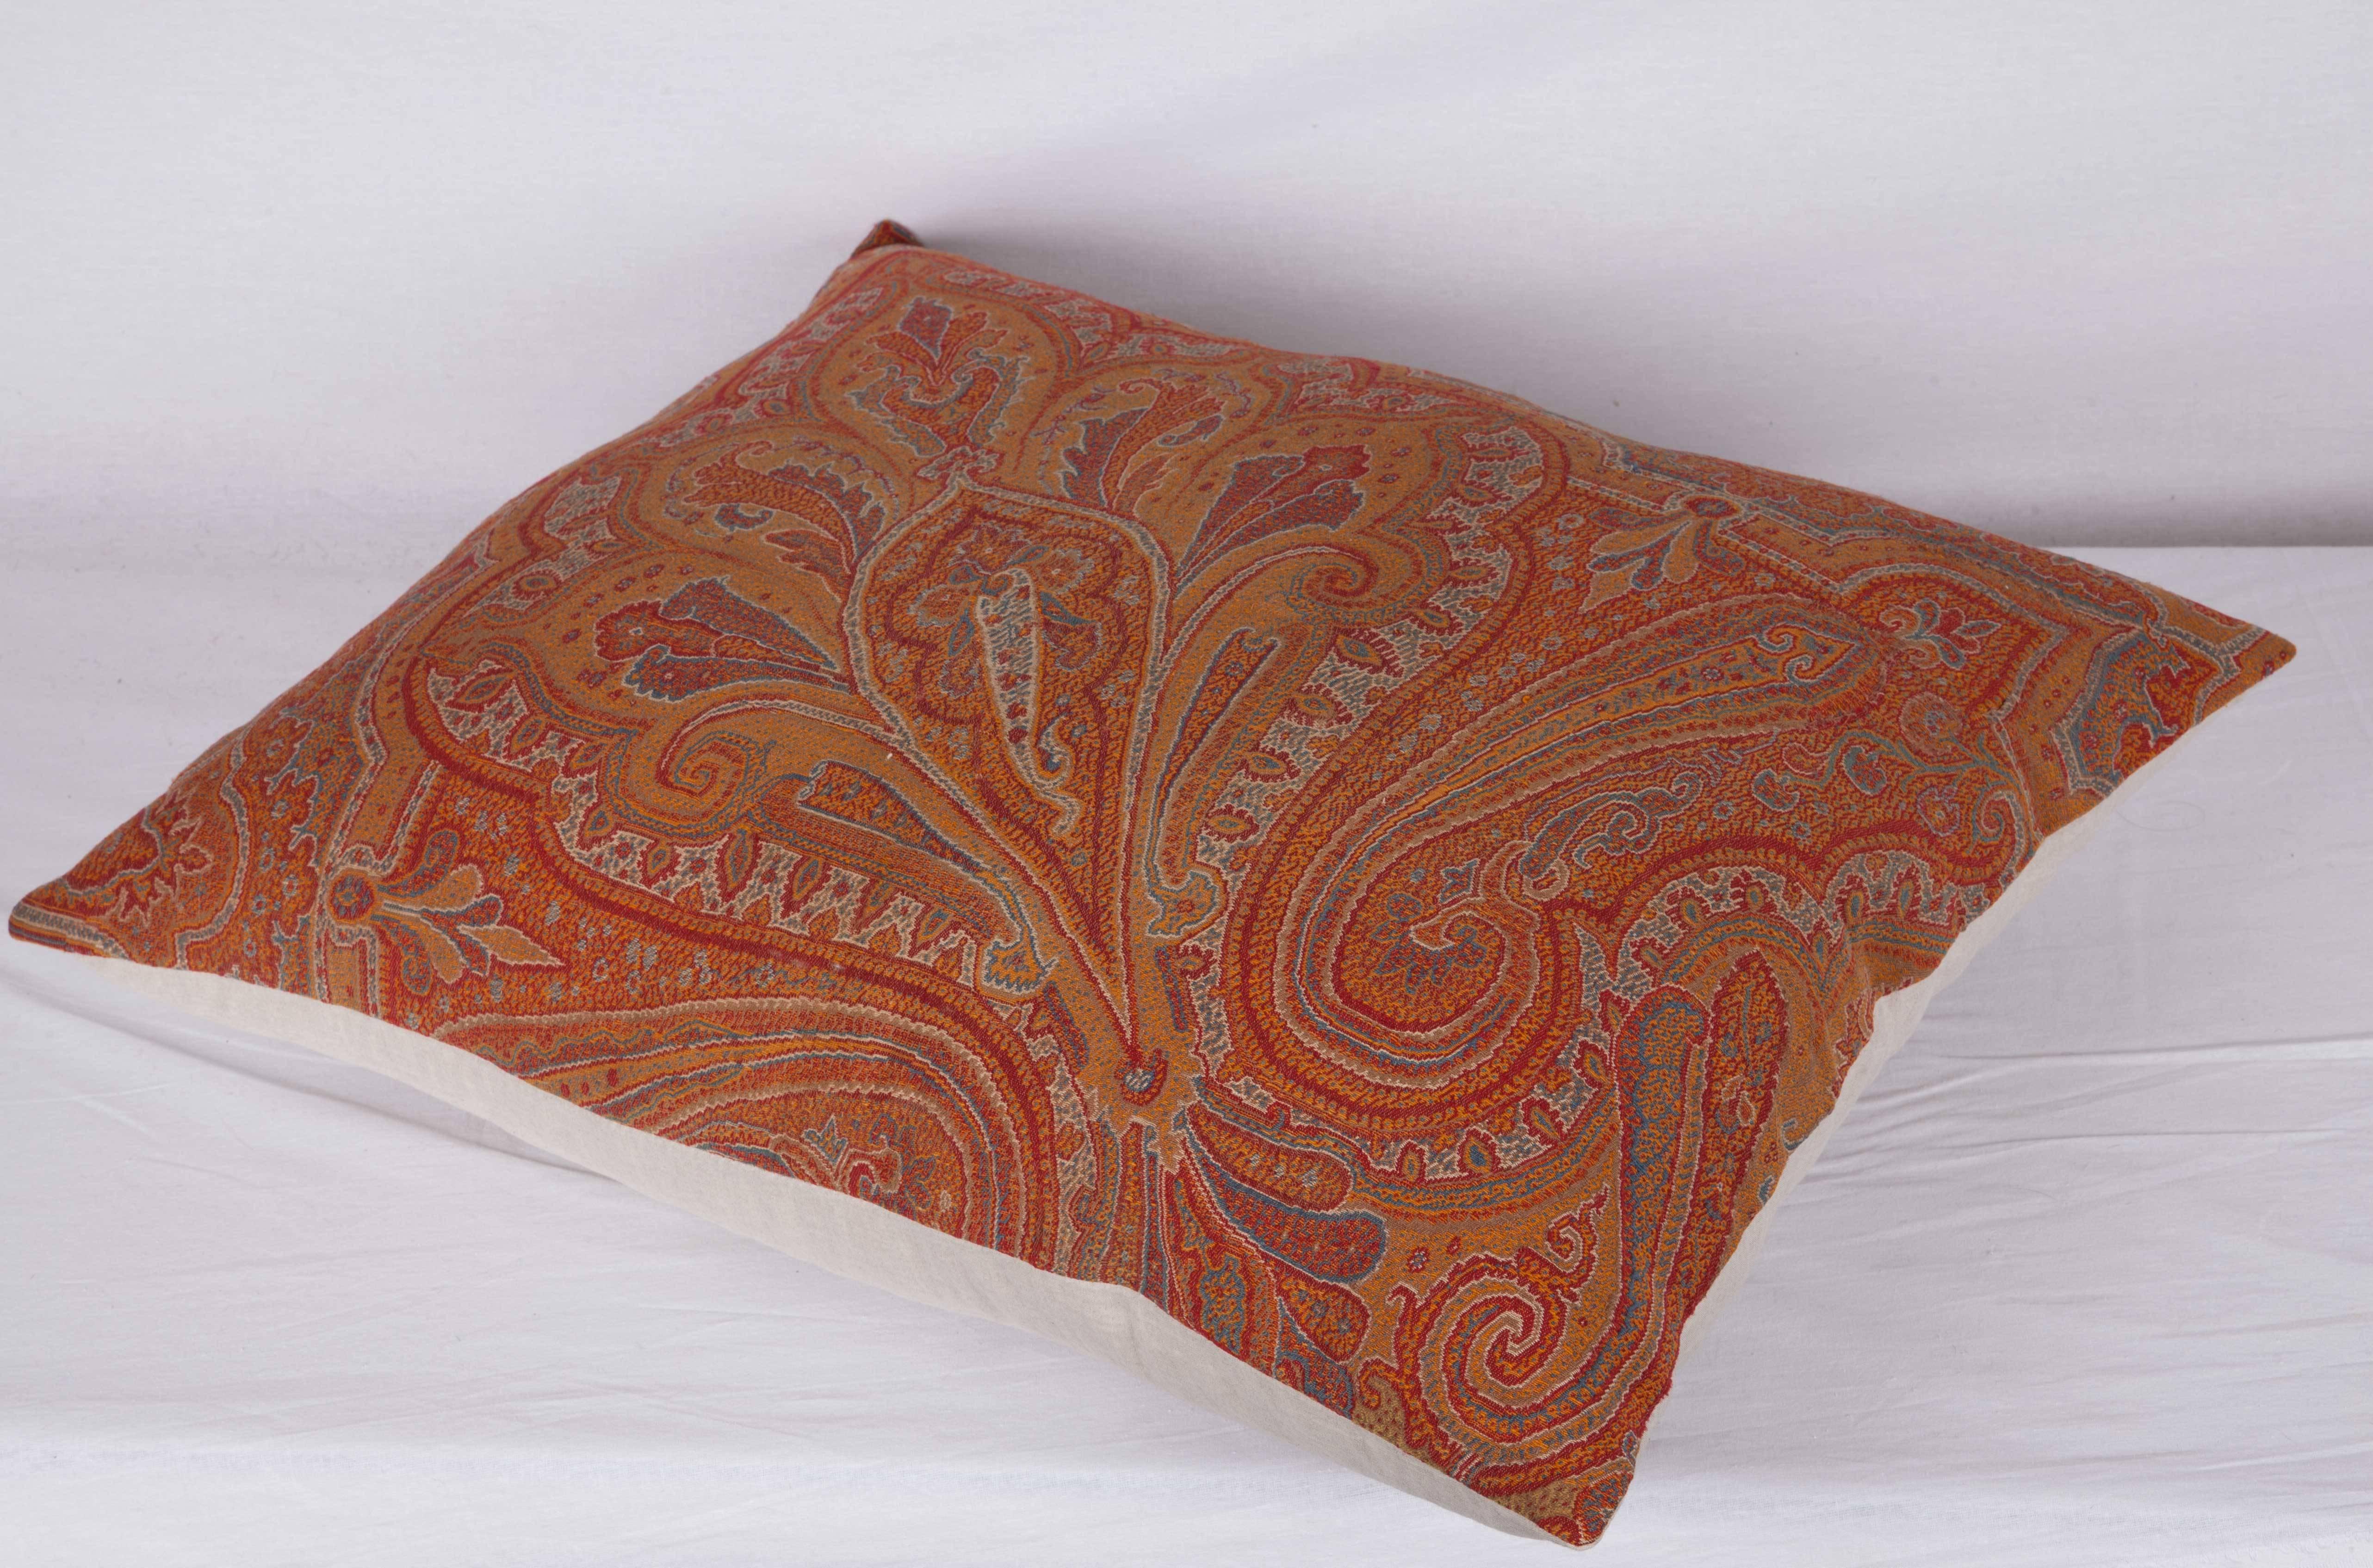 Woven 19th Century Paisley Wool Pillow